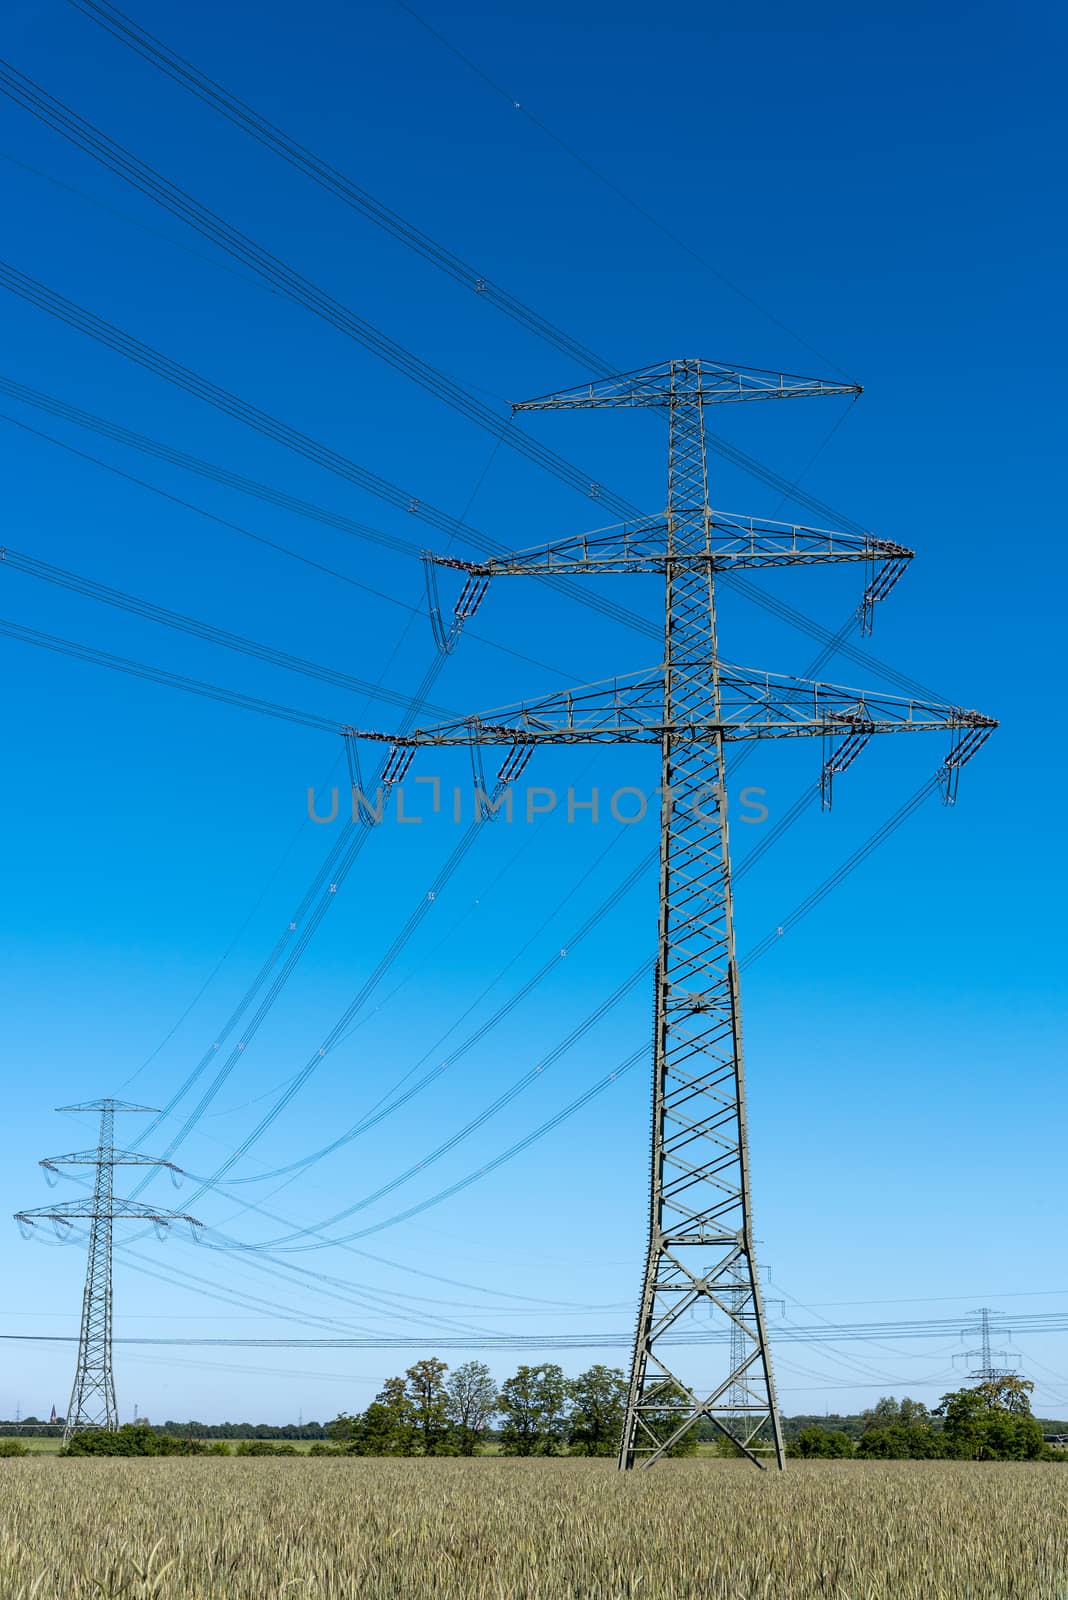 Electrical power lines seen in rural Germany